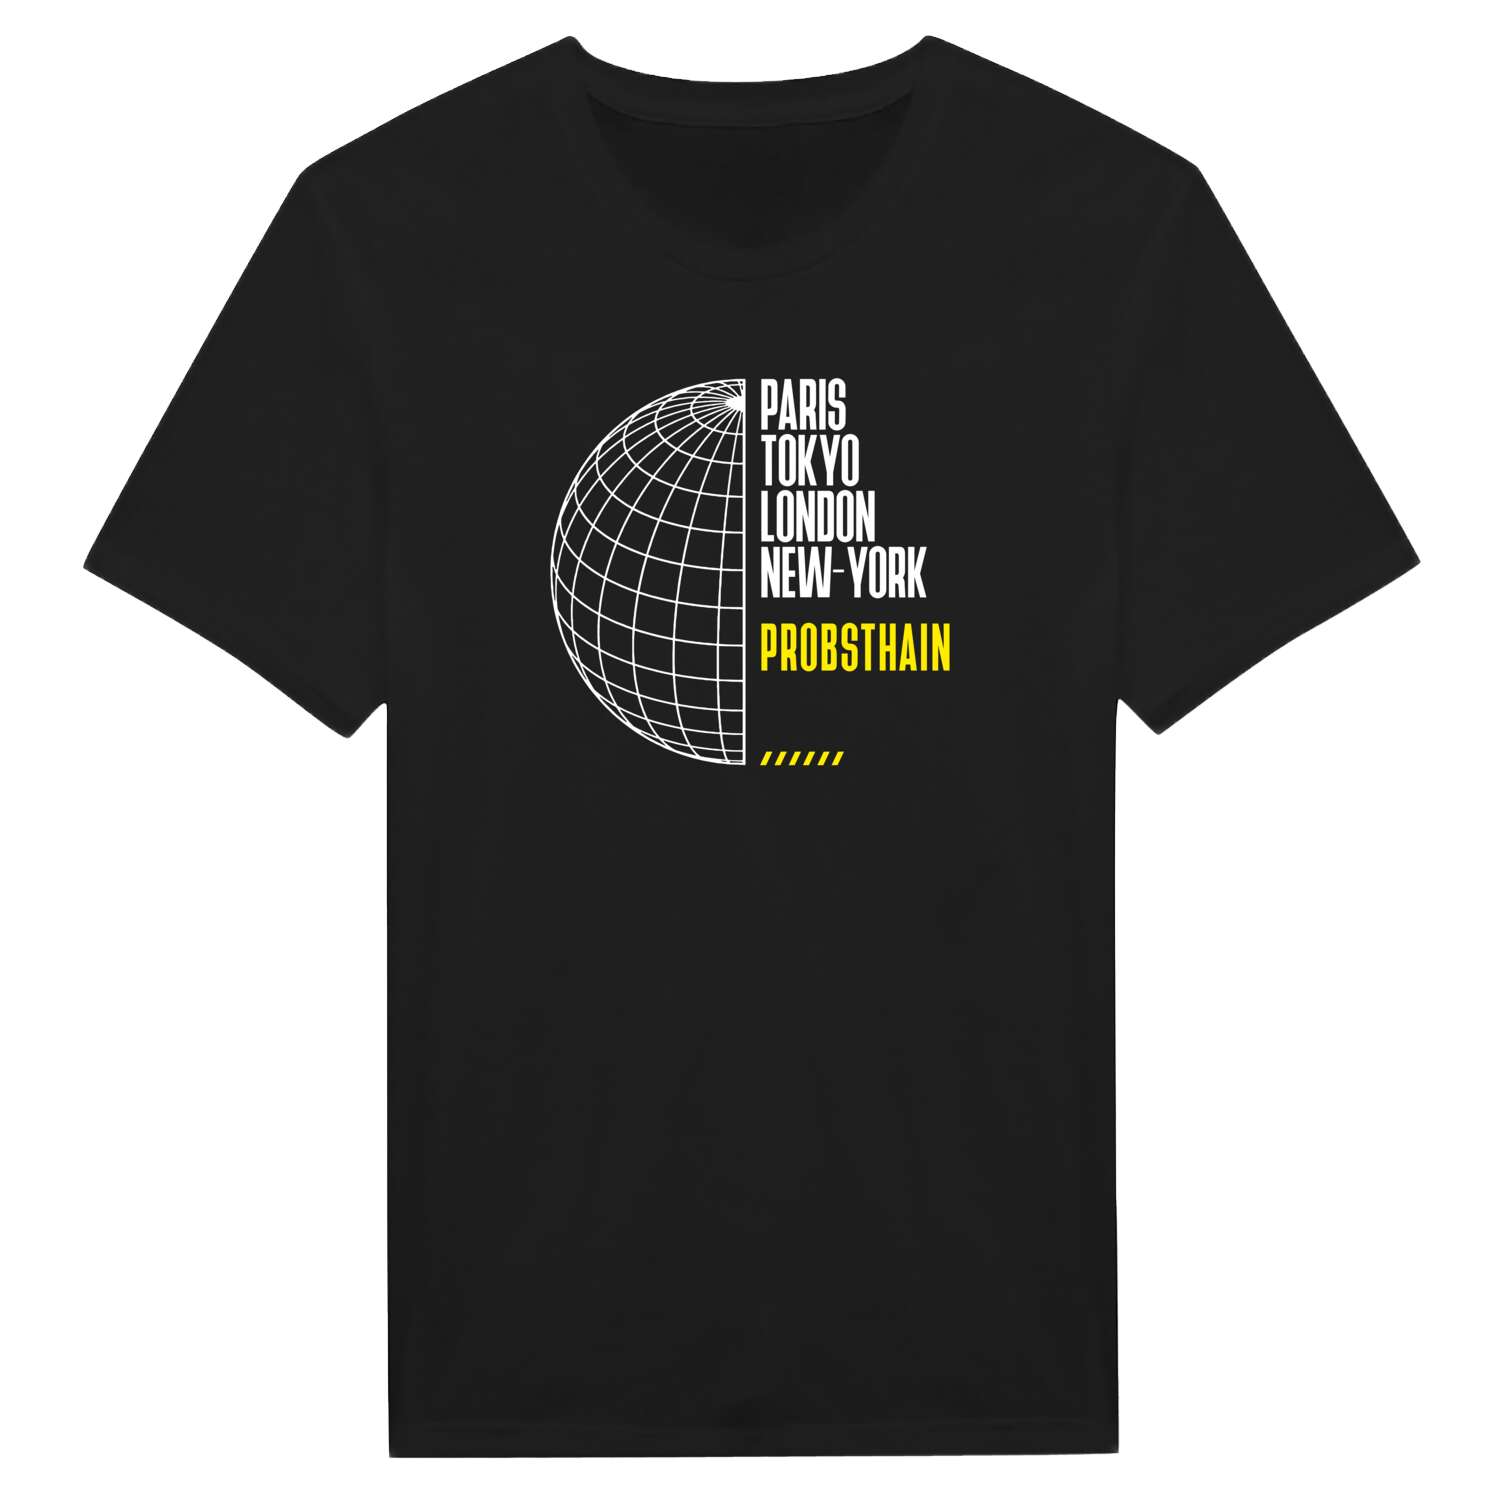 Probsthain T-Shirt »Paris Tokyo London«